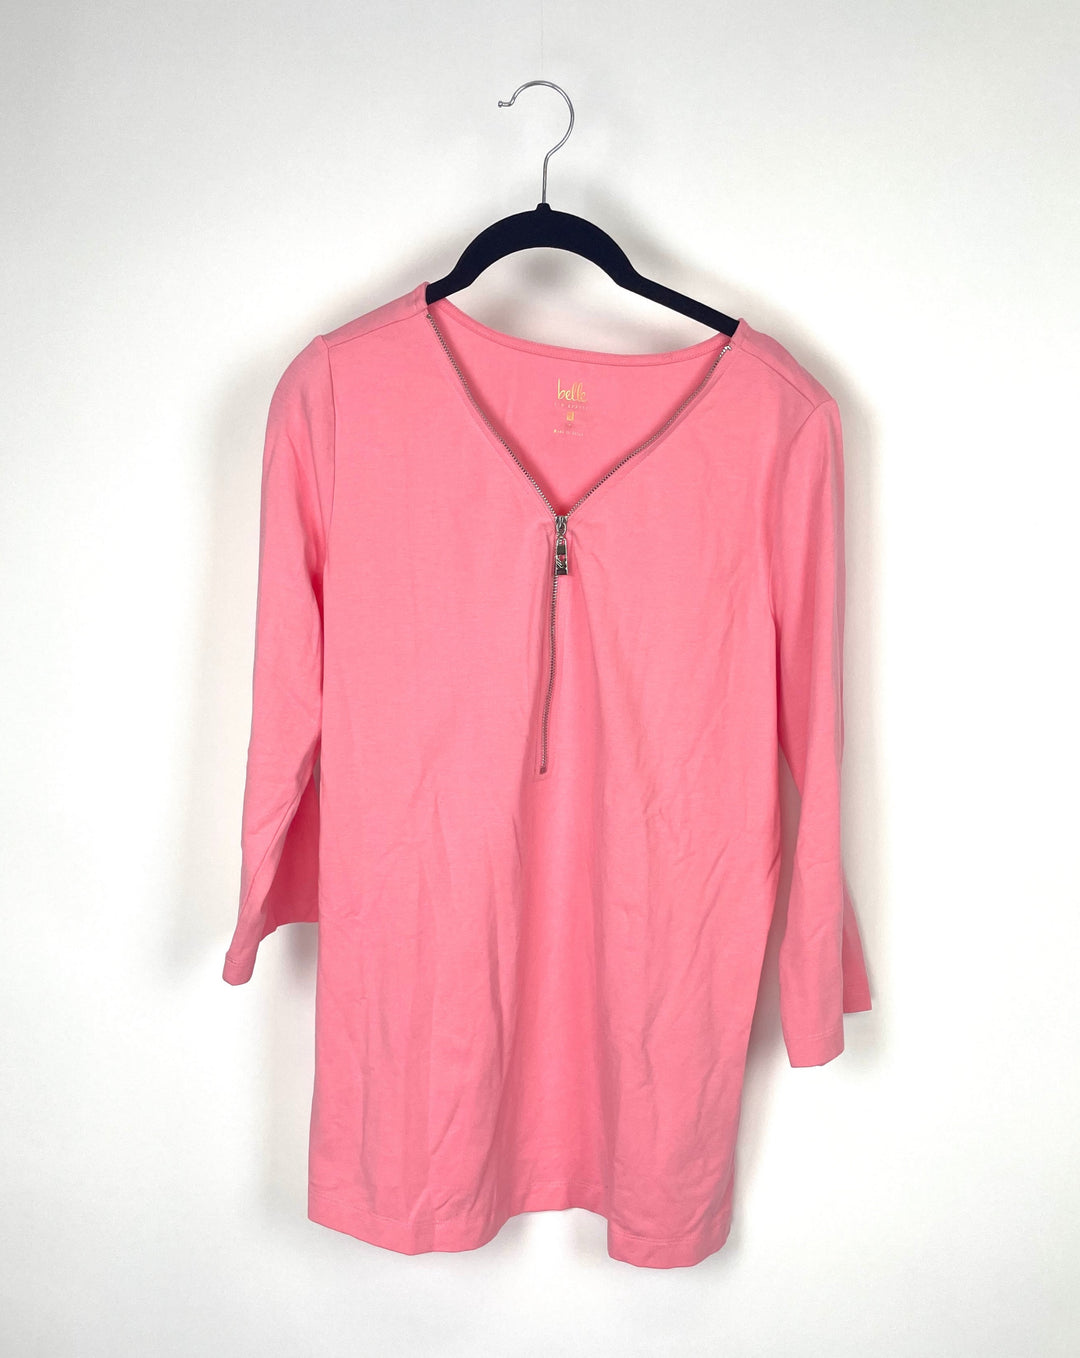 Pink Zippered Long Sleeve Top - Small/Medium